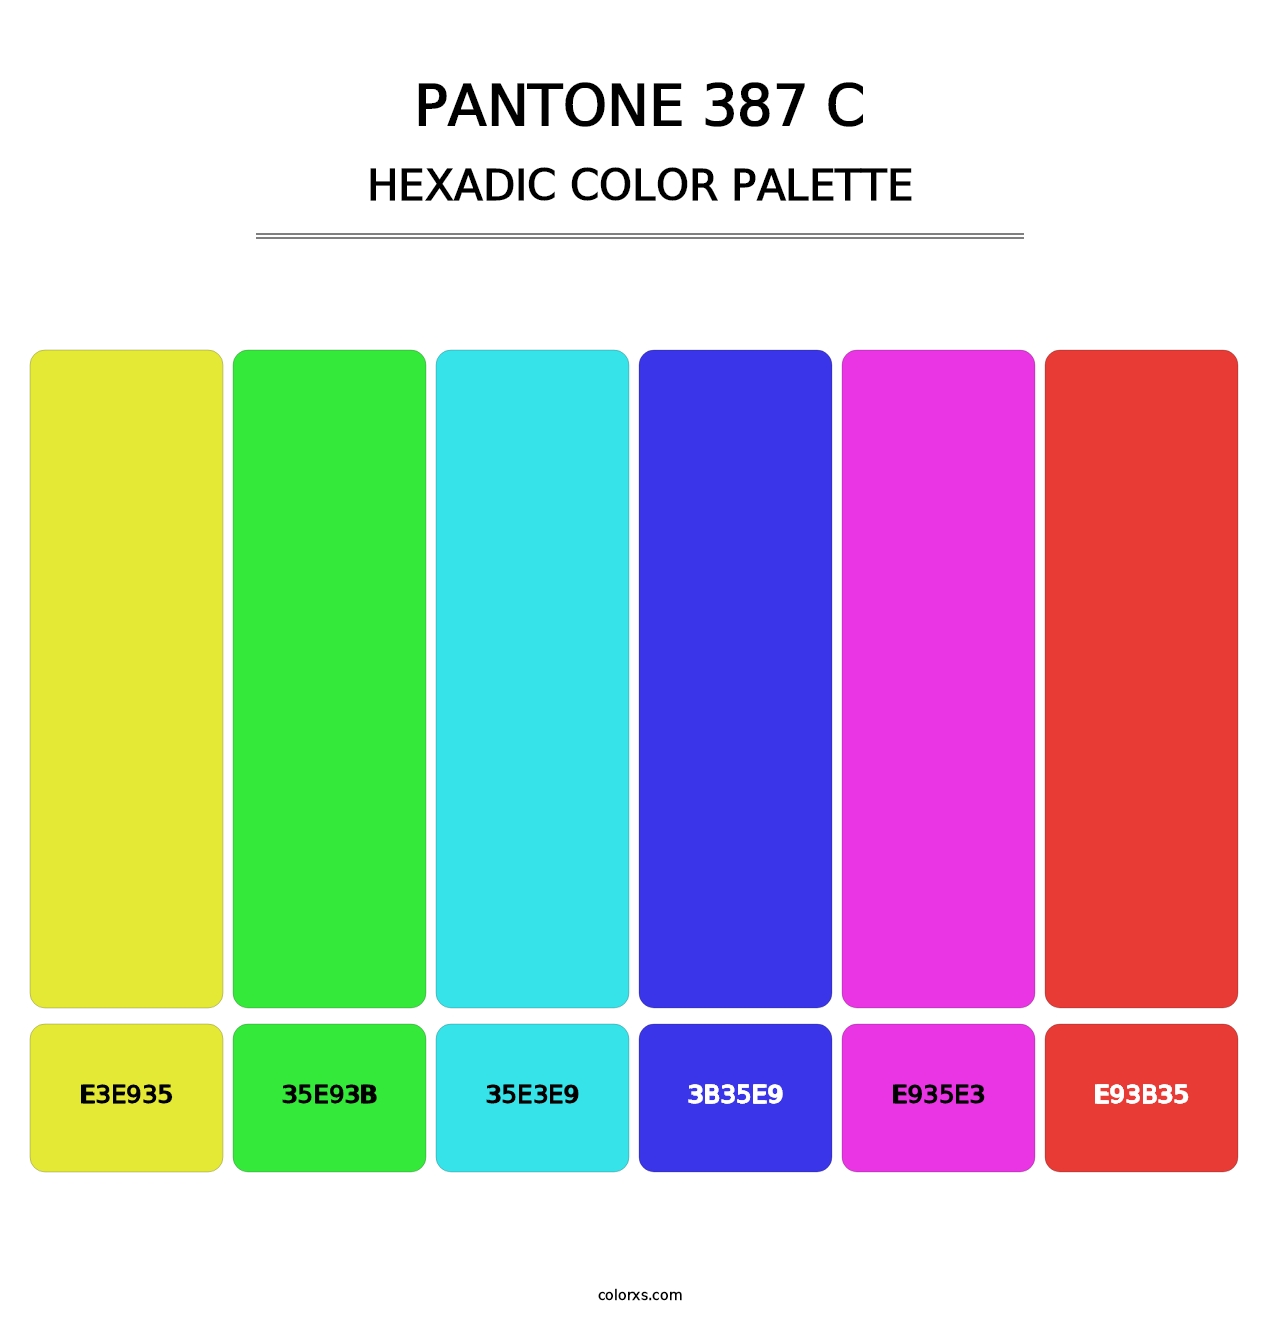 PANTONE 387 C - Hexadic Color Palette